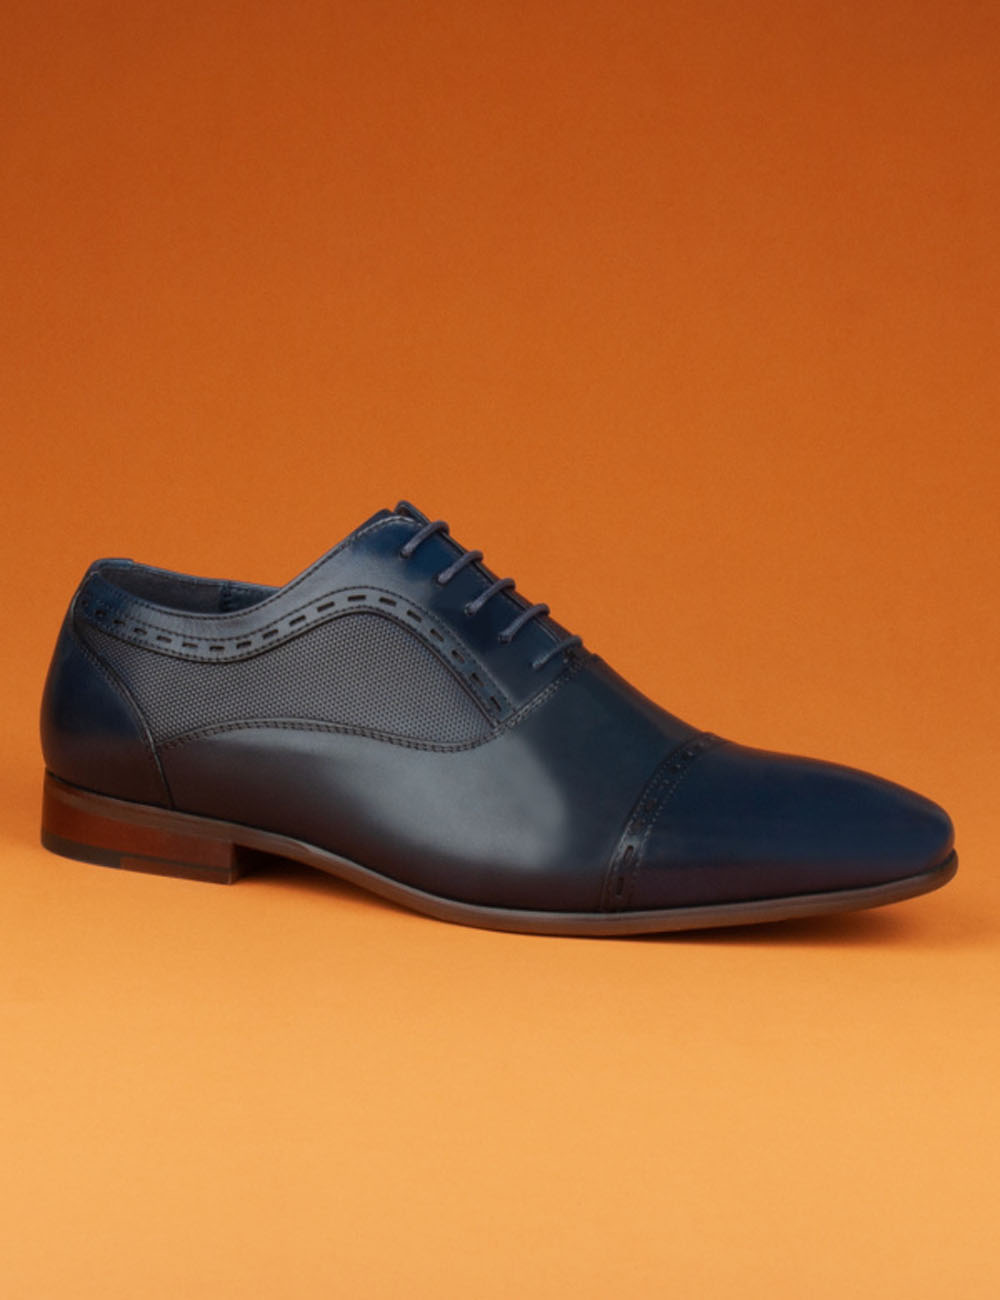 Galthie Liberty Blue Shoe